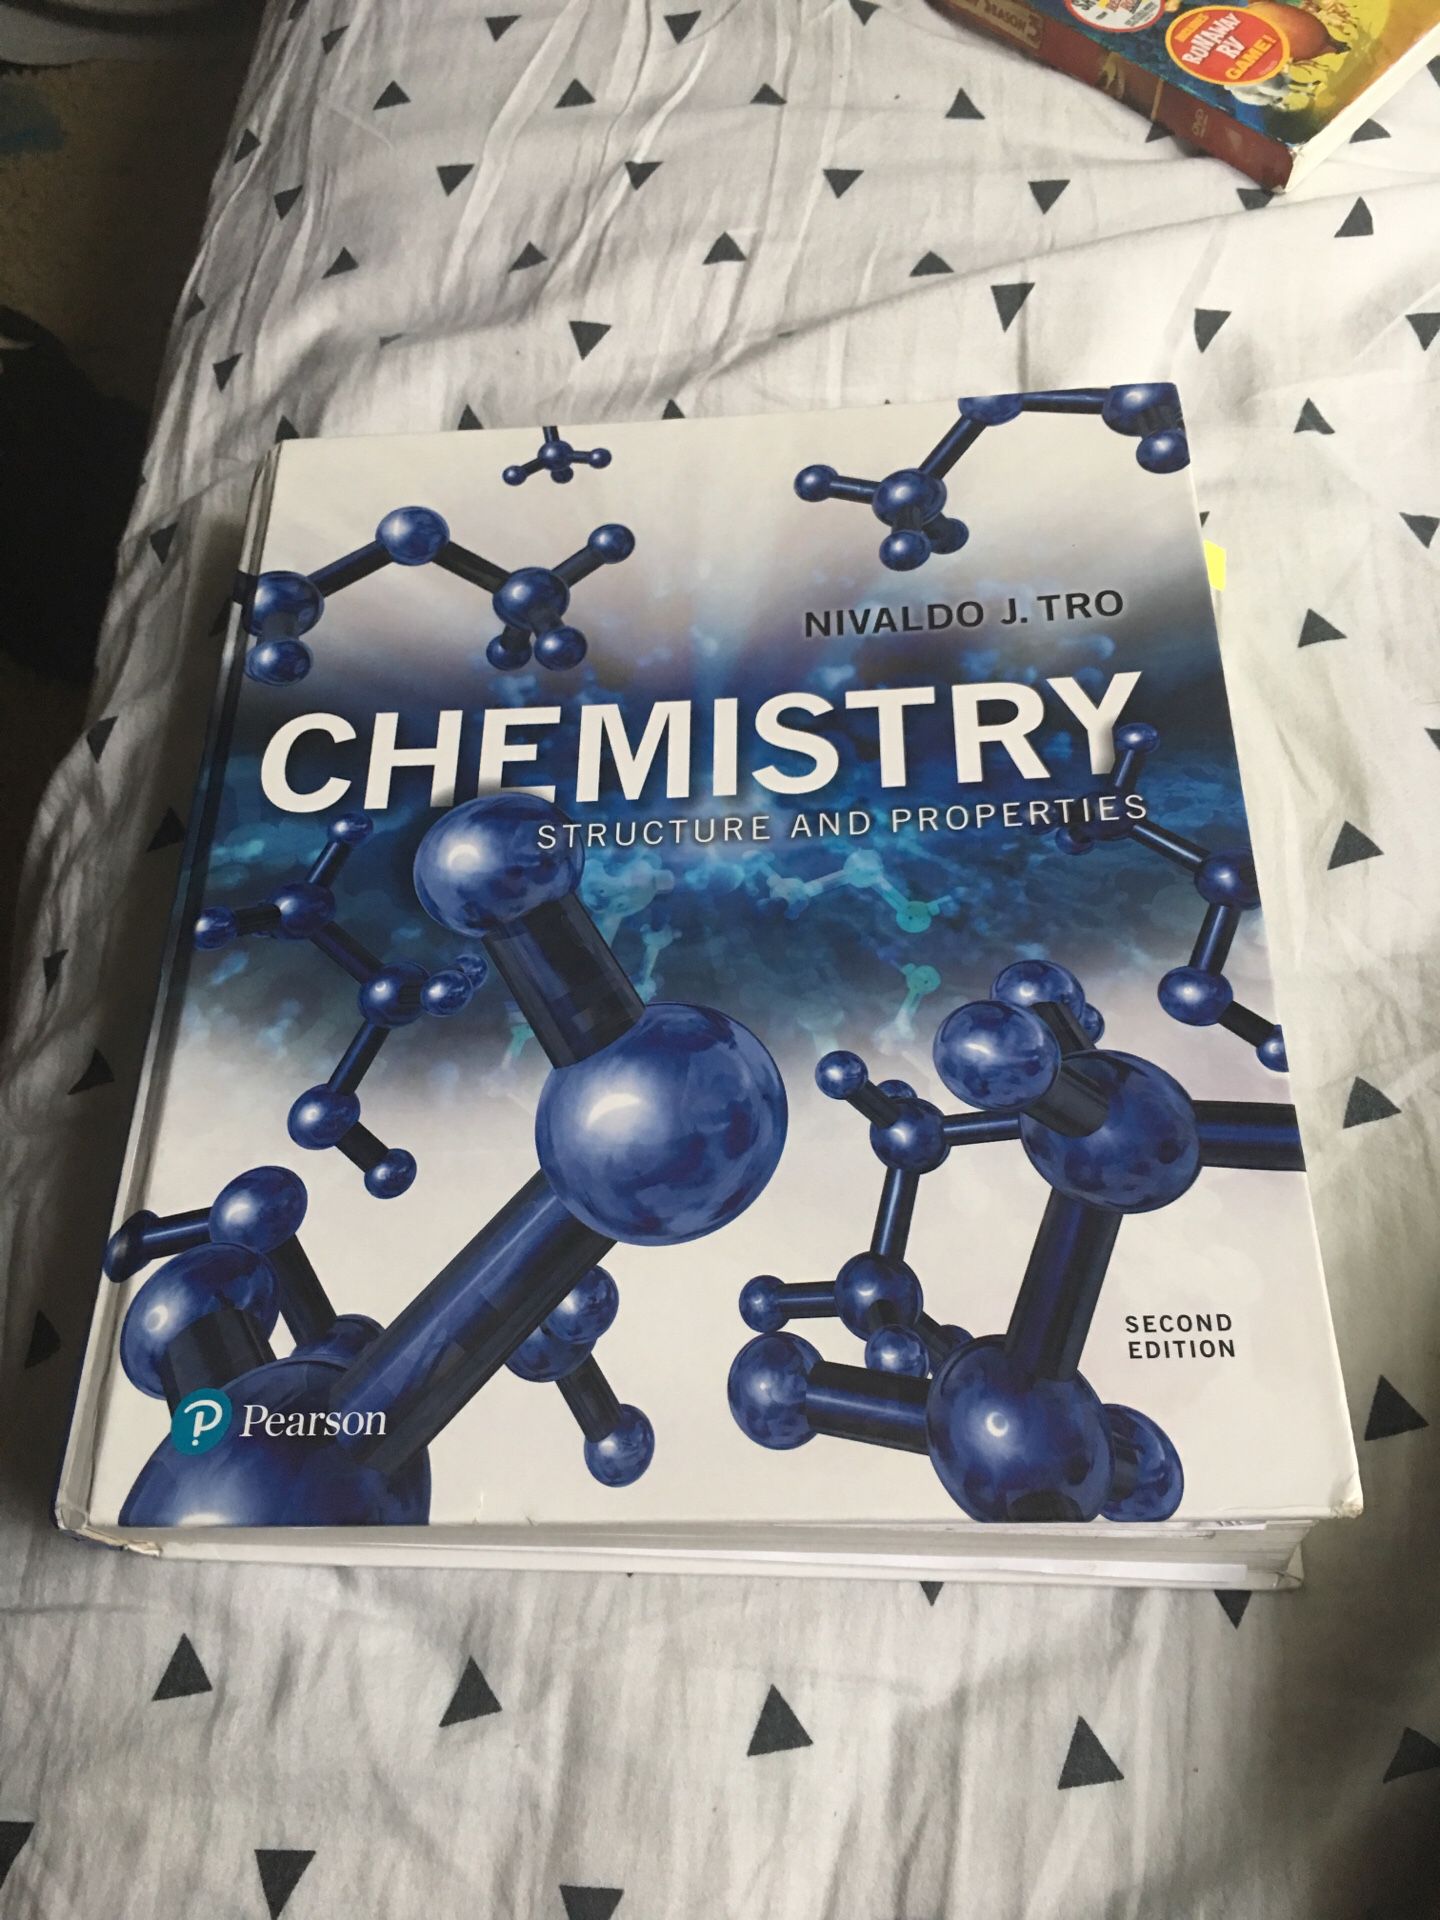 Chemistry Textbook